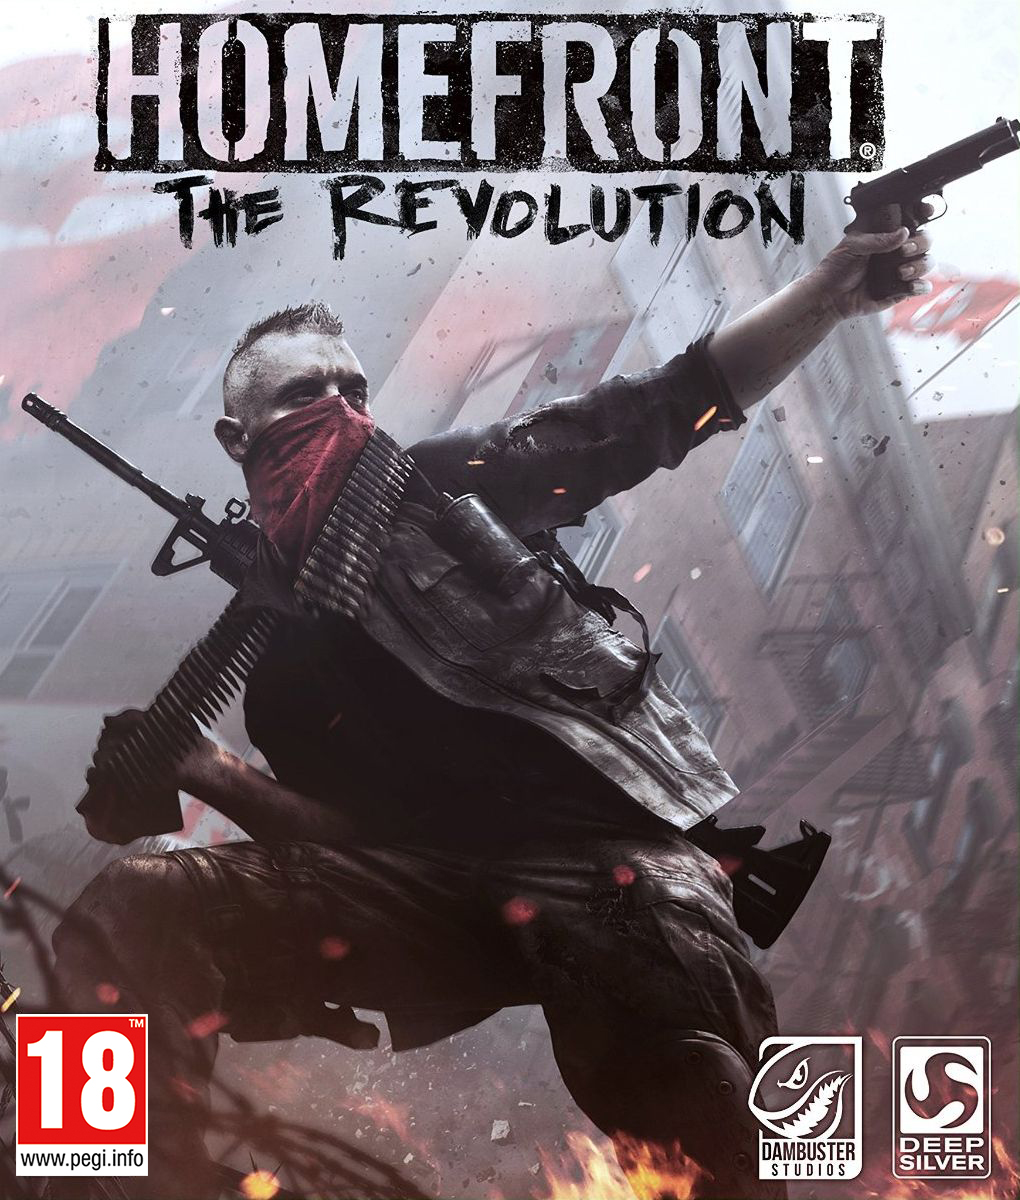 homefront-the-revolution-cover-art